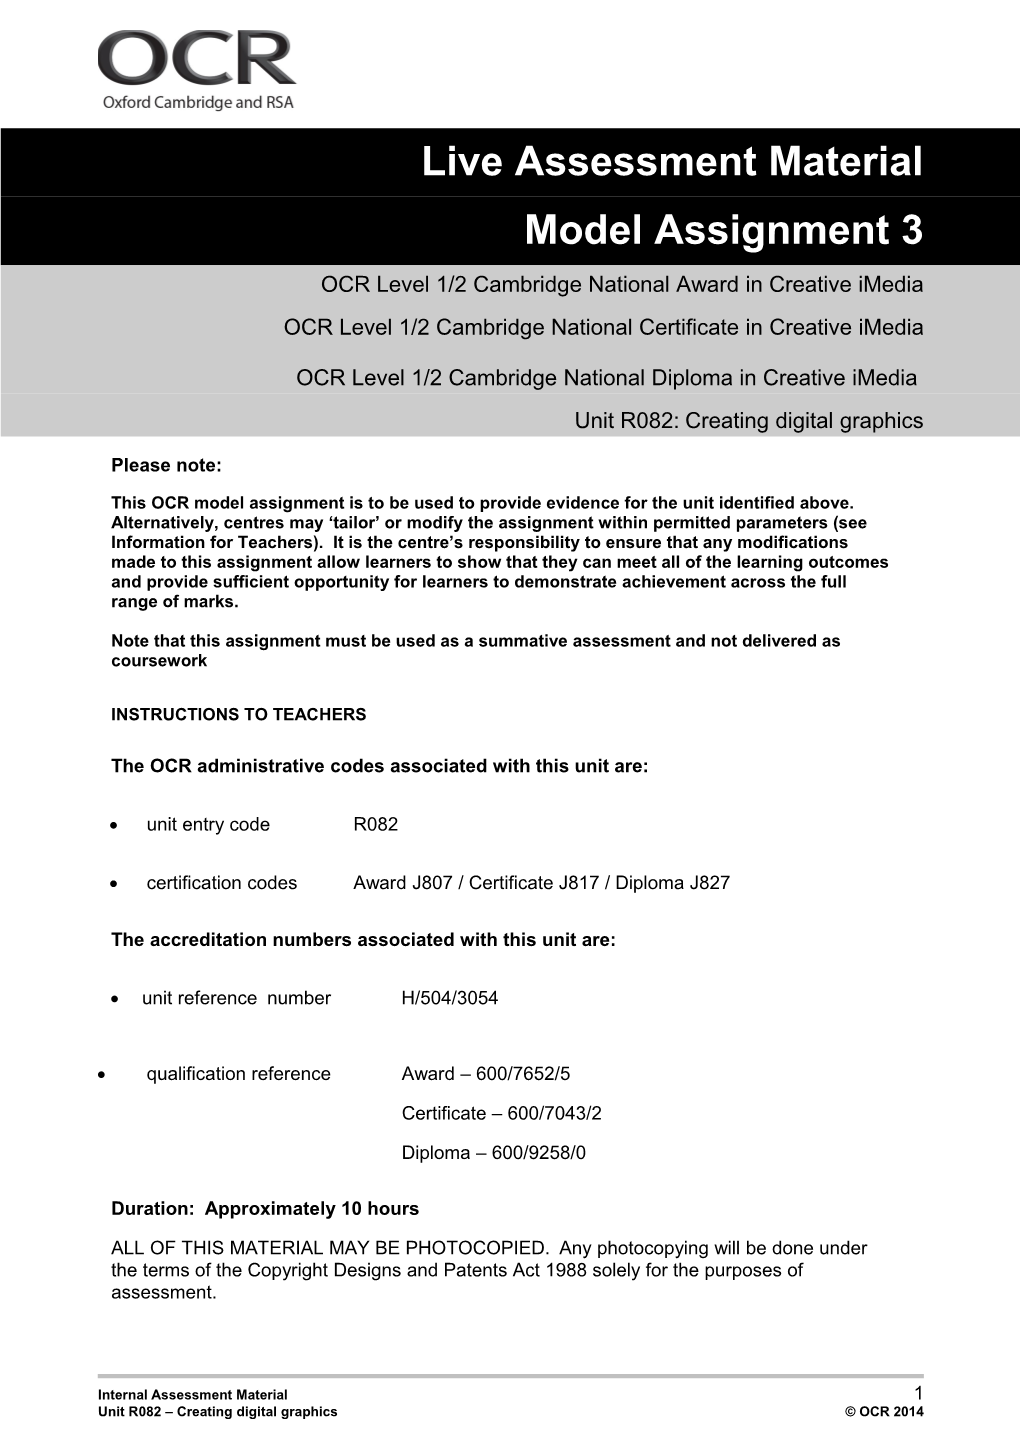 Unit R082 - Creating Digital Graphics - Model Assignment 3